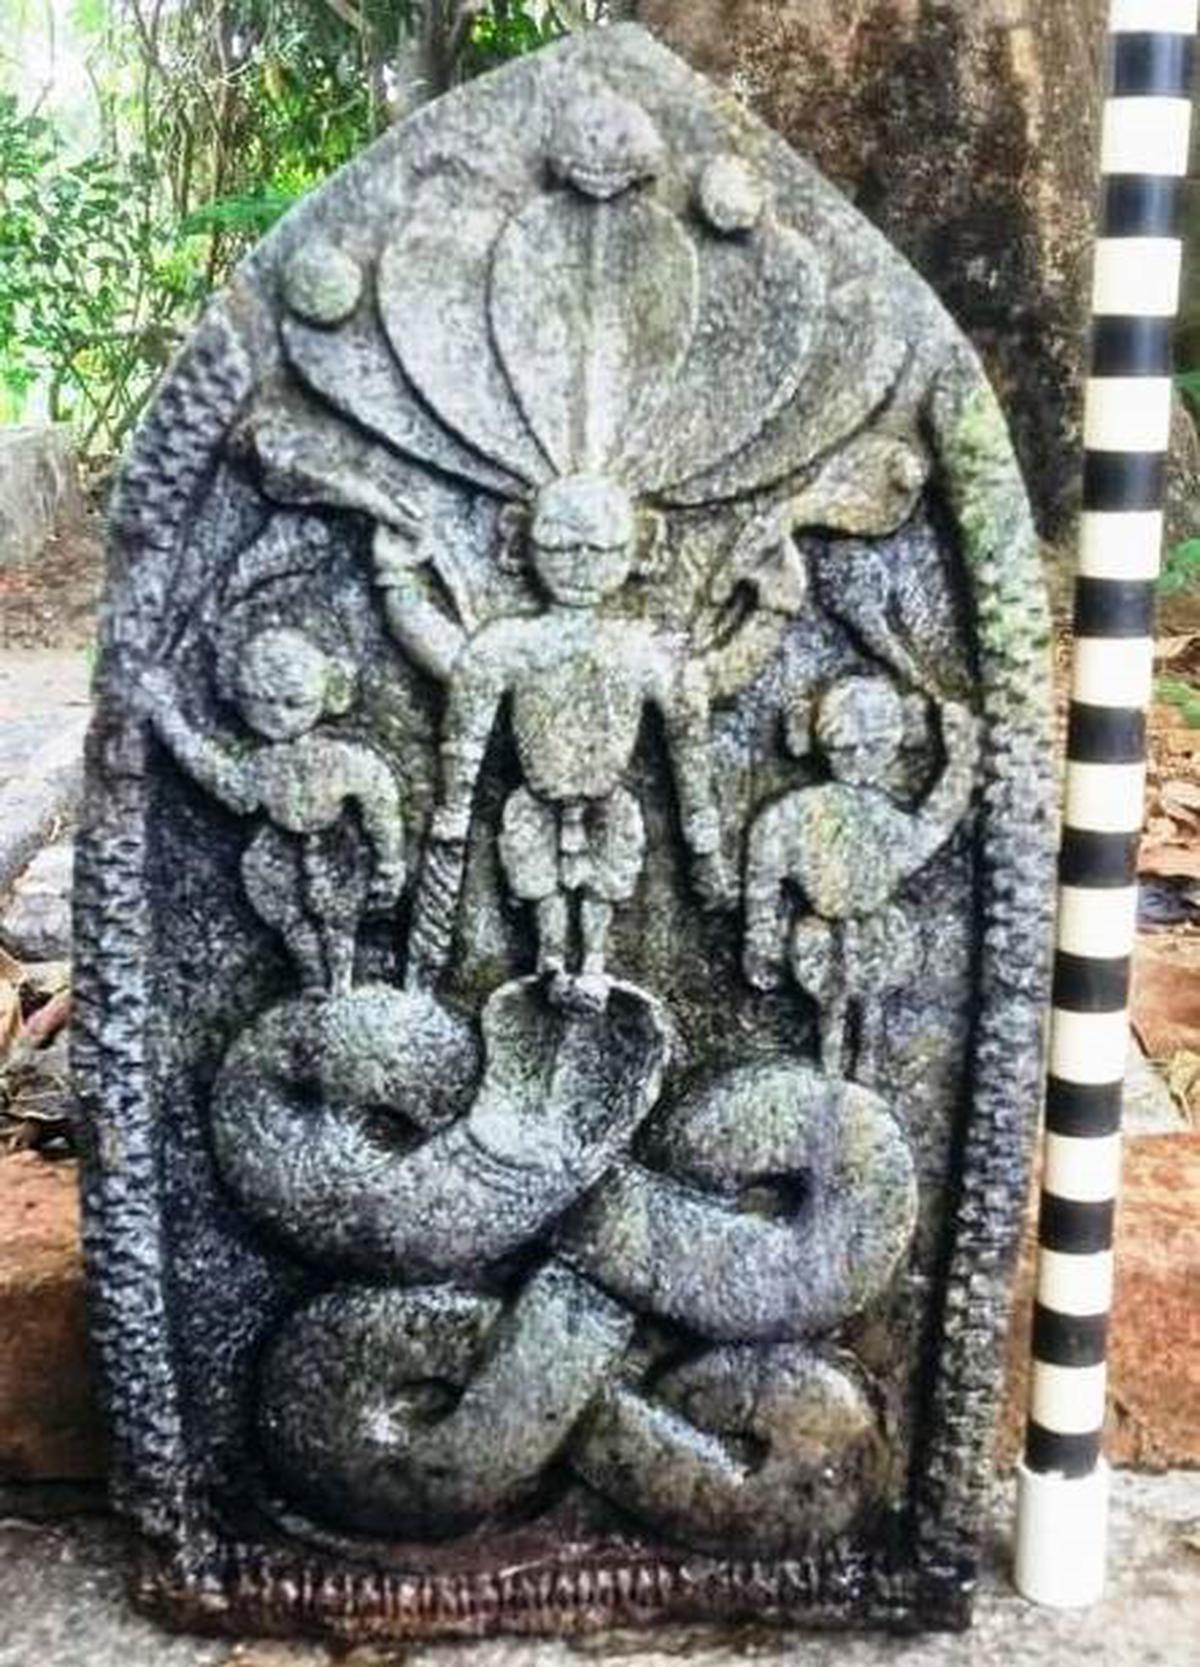 A rare sculpture of Nagabhairava found in Udupi district